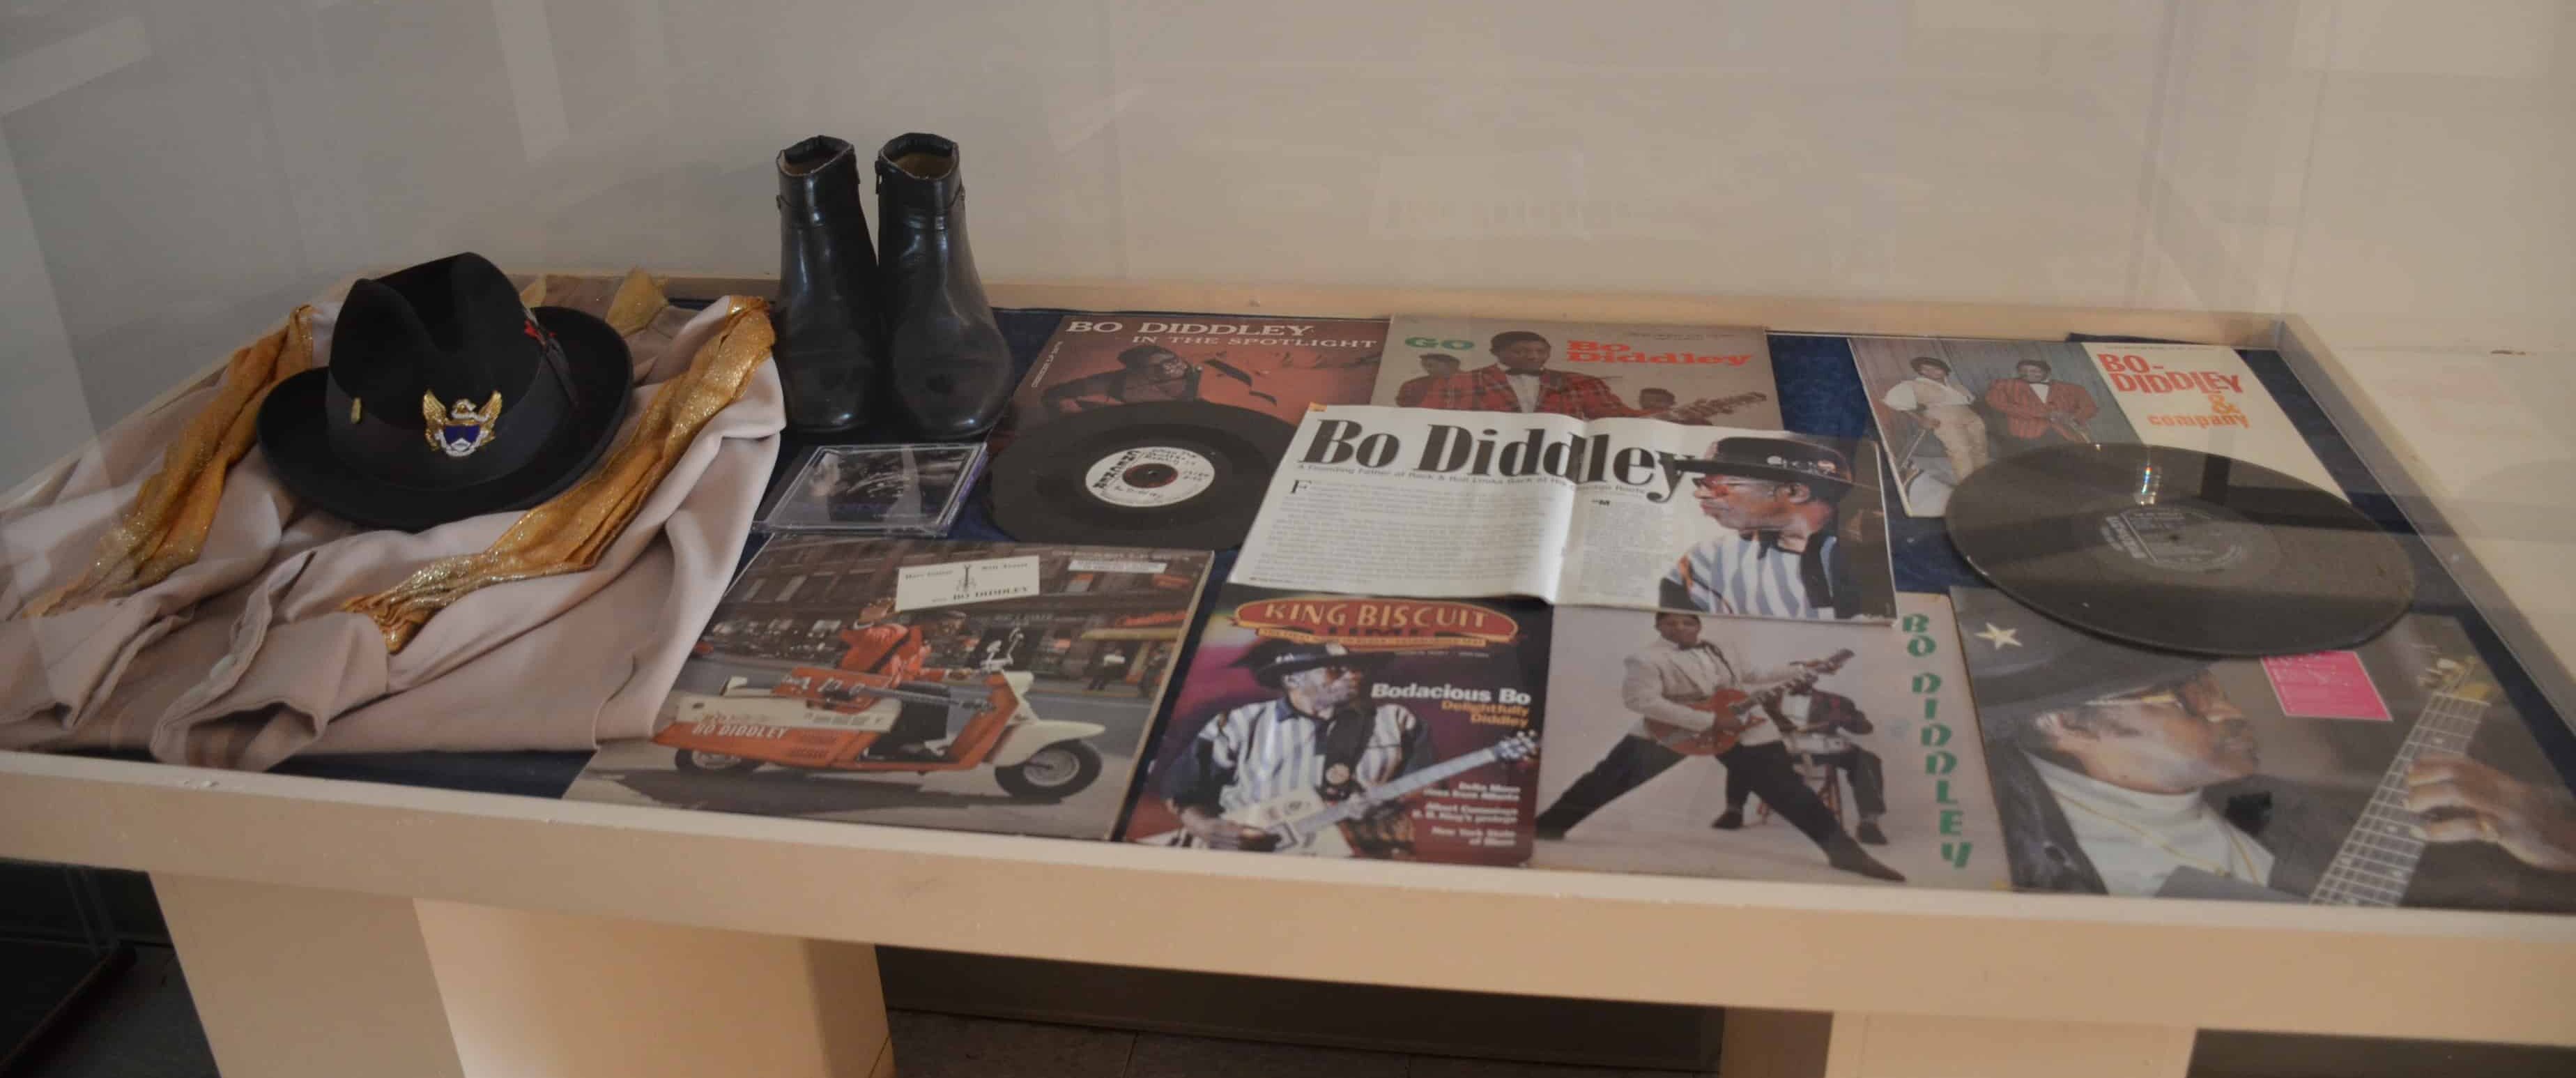 Bo Diddley memorabilia at Chess Records building (Willie Dixon's Blues Heaven) in Chicago, Illinois